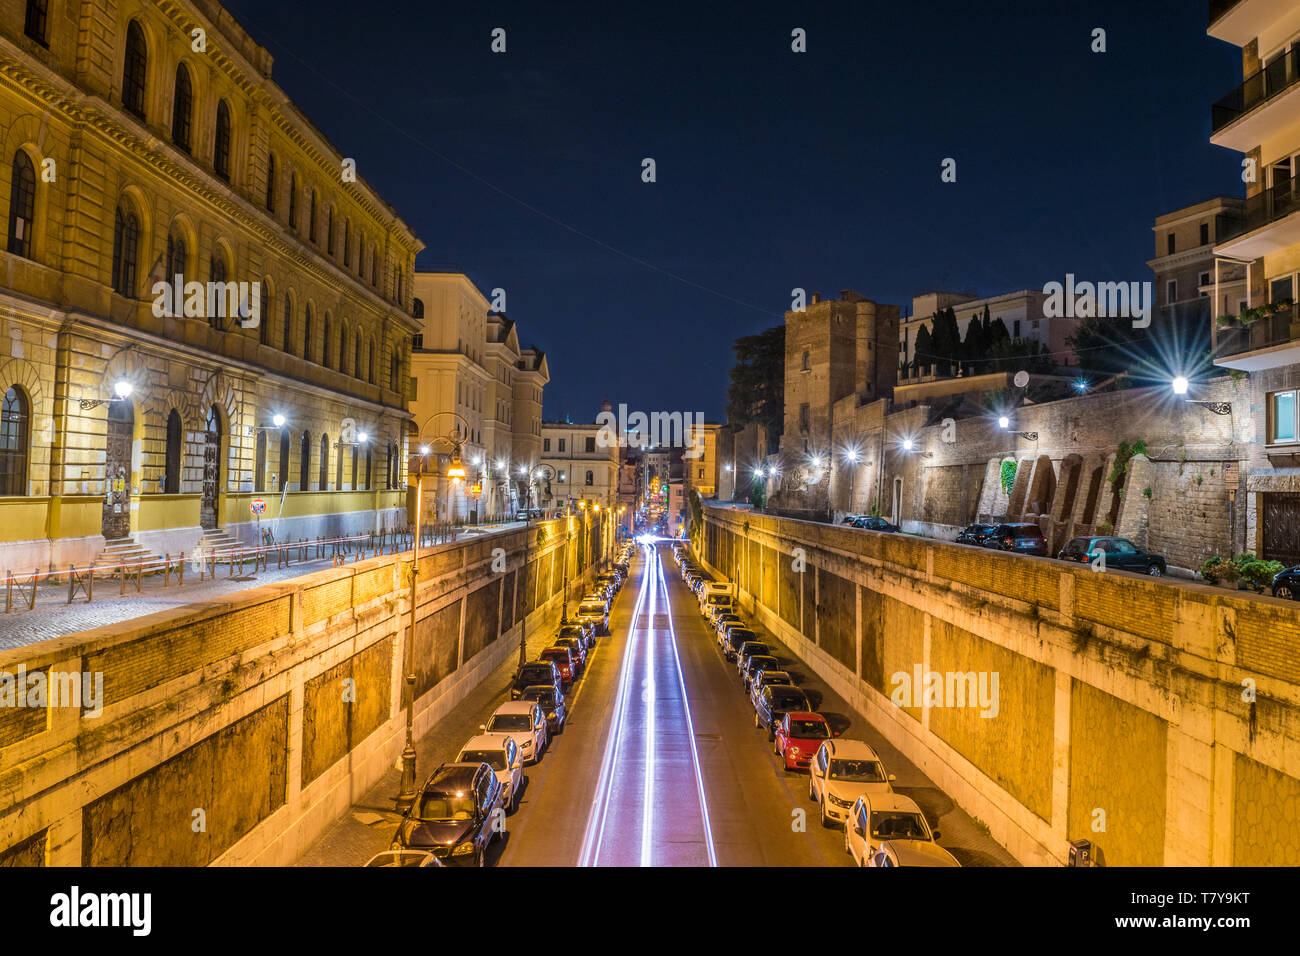 Light tracks of vehicles on Annibaldi street at night in Rome - Italy Stock Photo